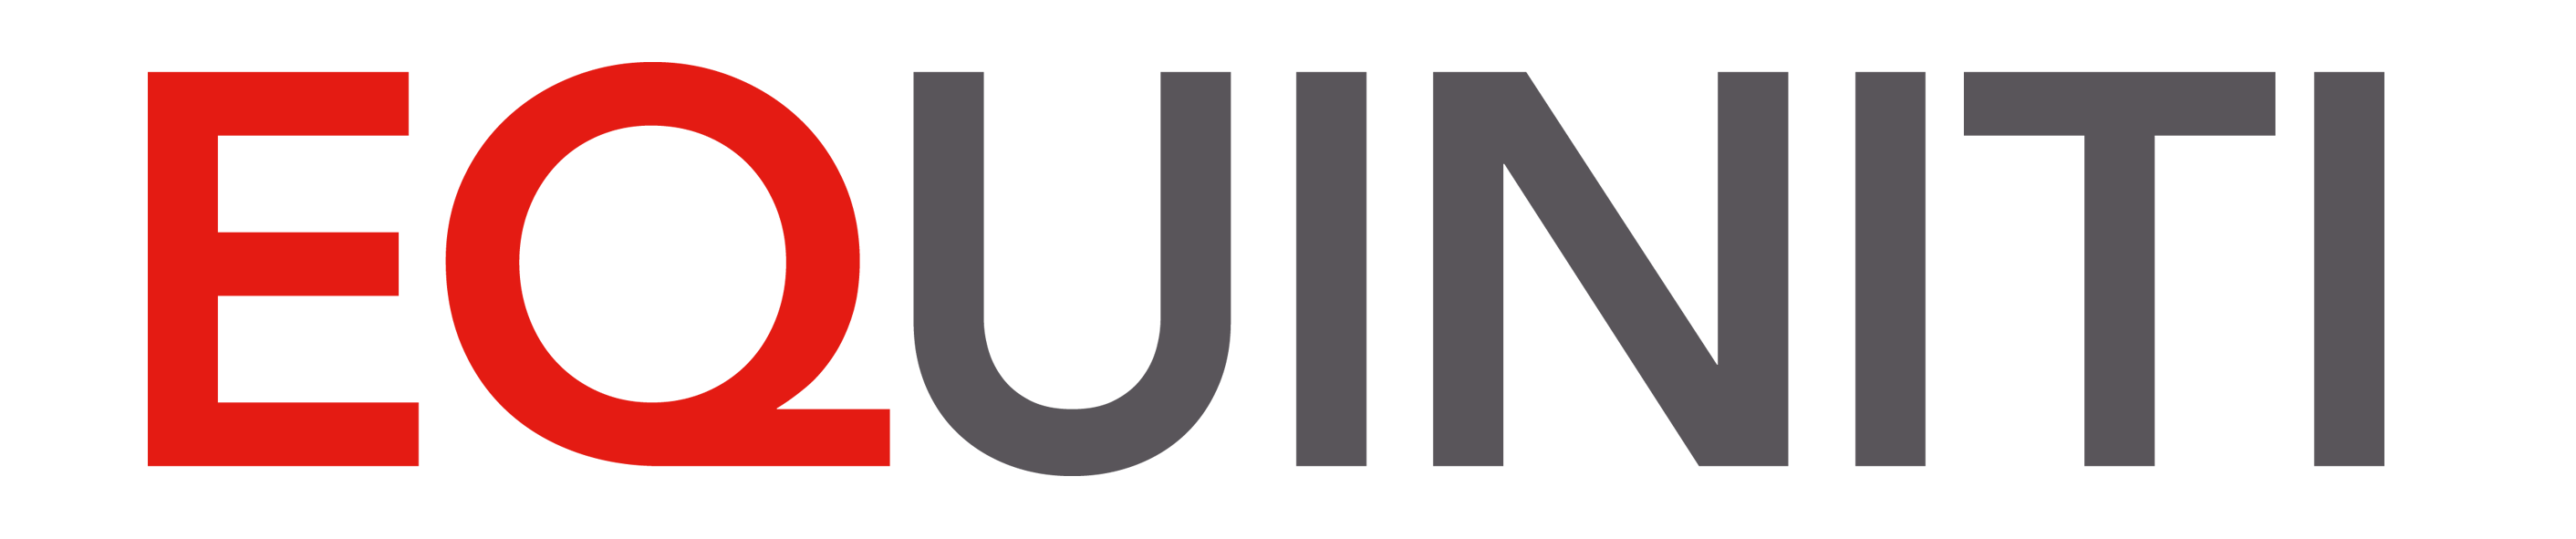 Equiniti - Logo